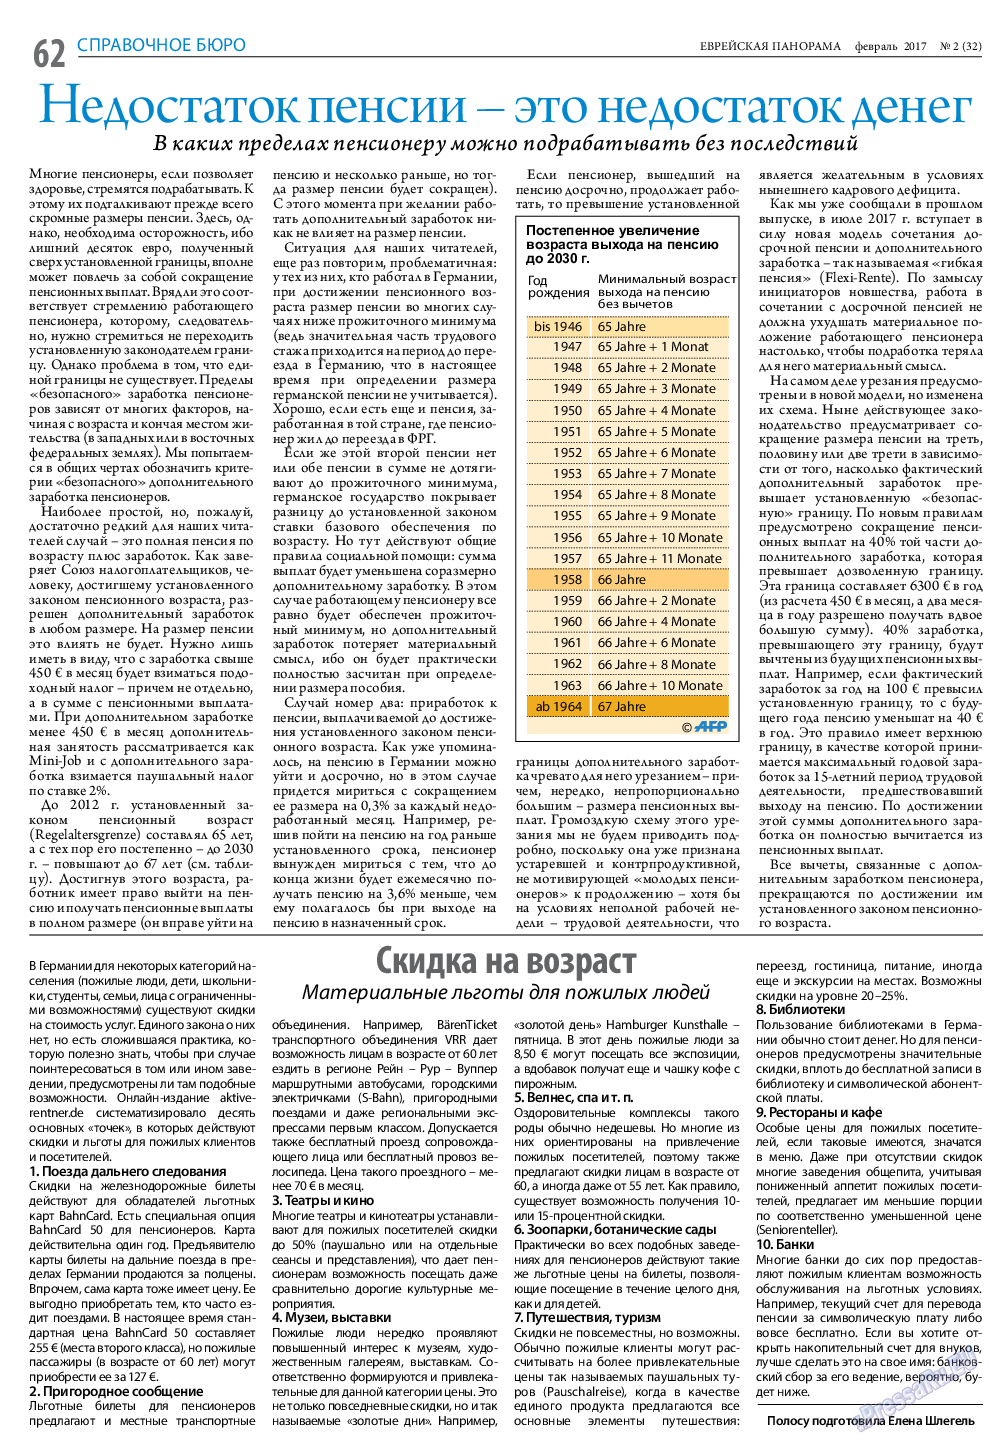 Еврейская панорама, газета. 2017 №2 стр.62